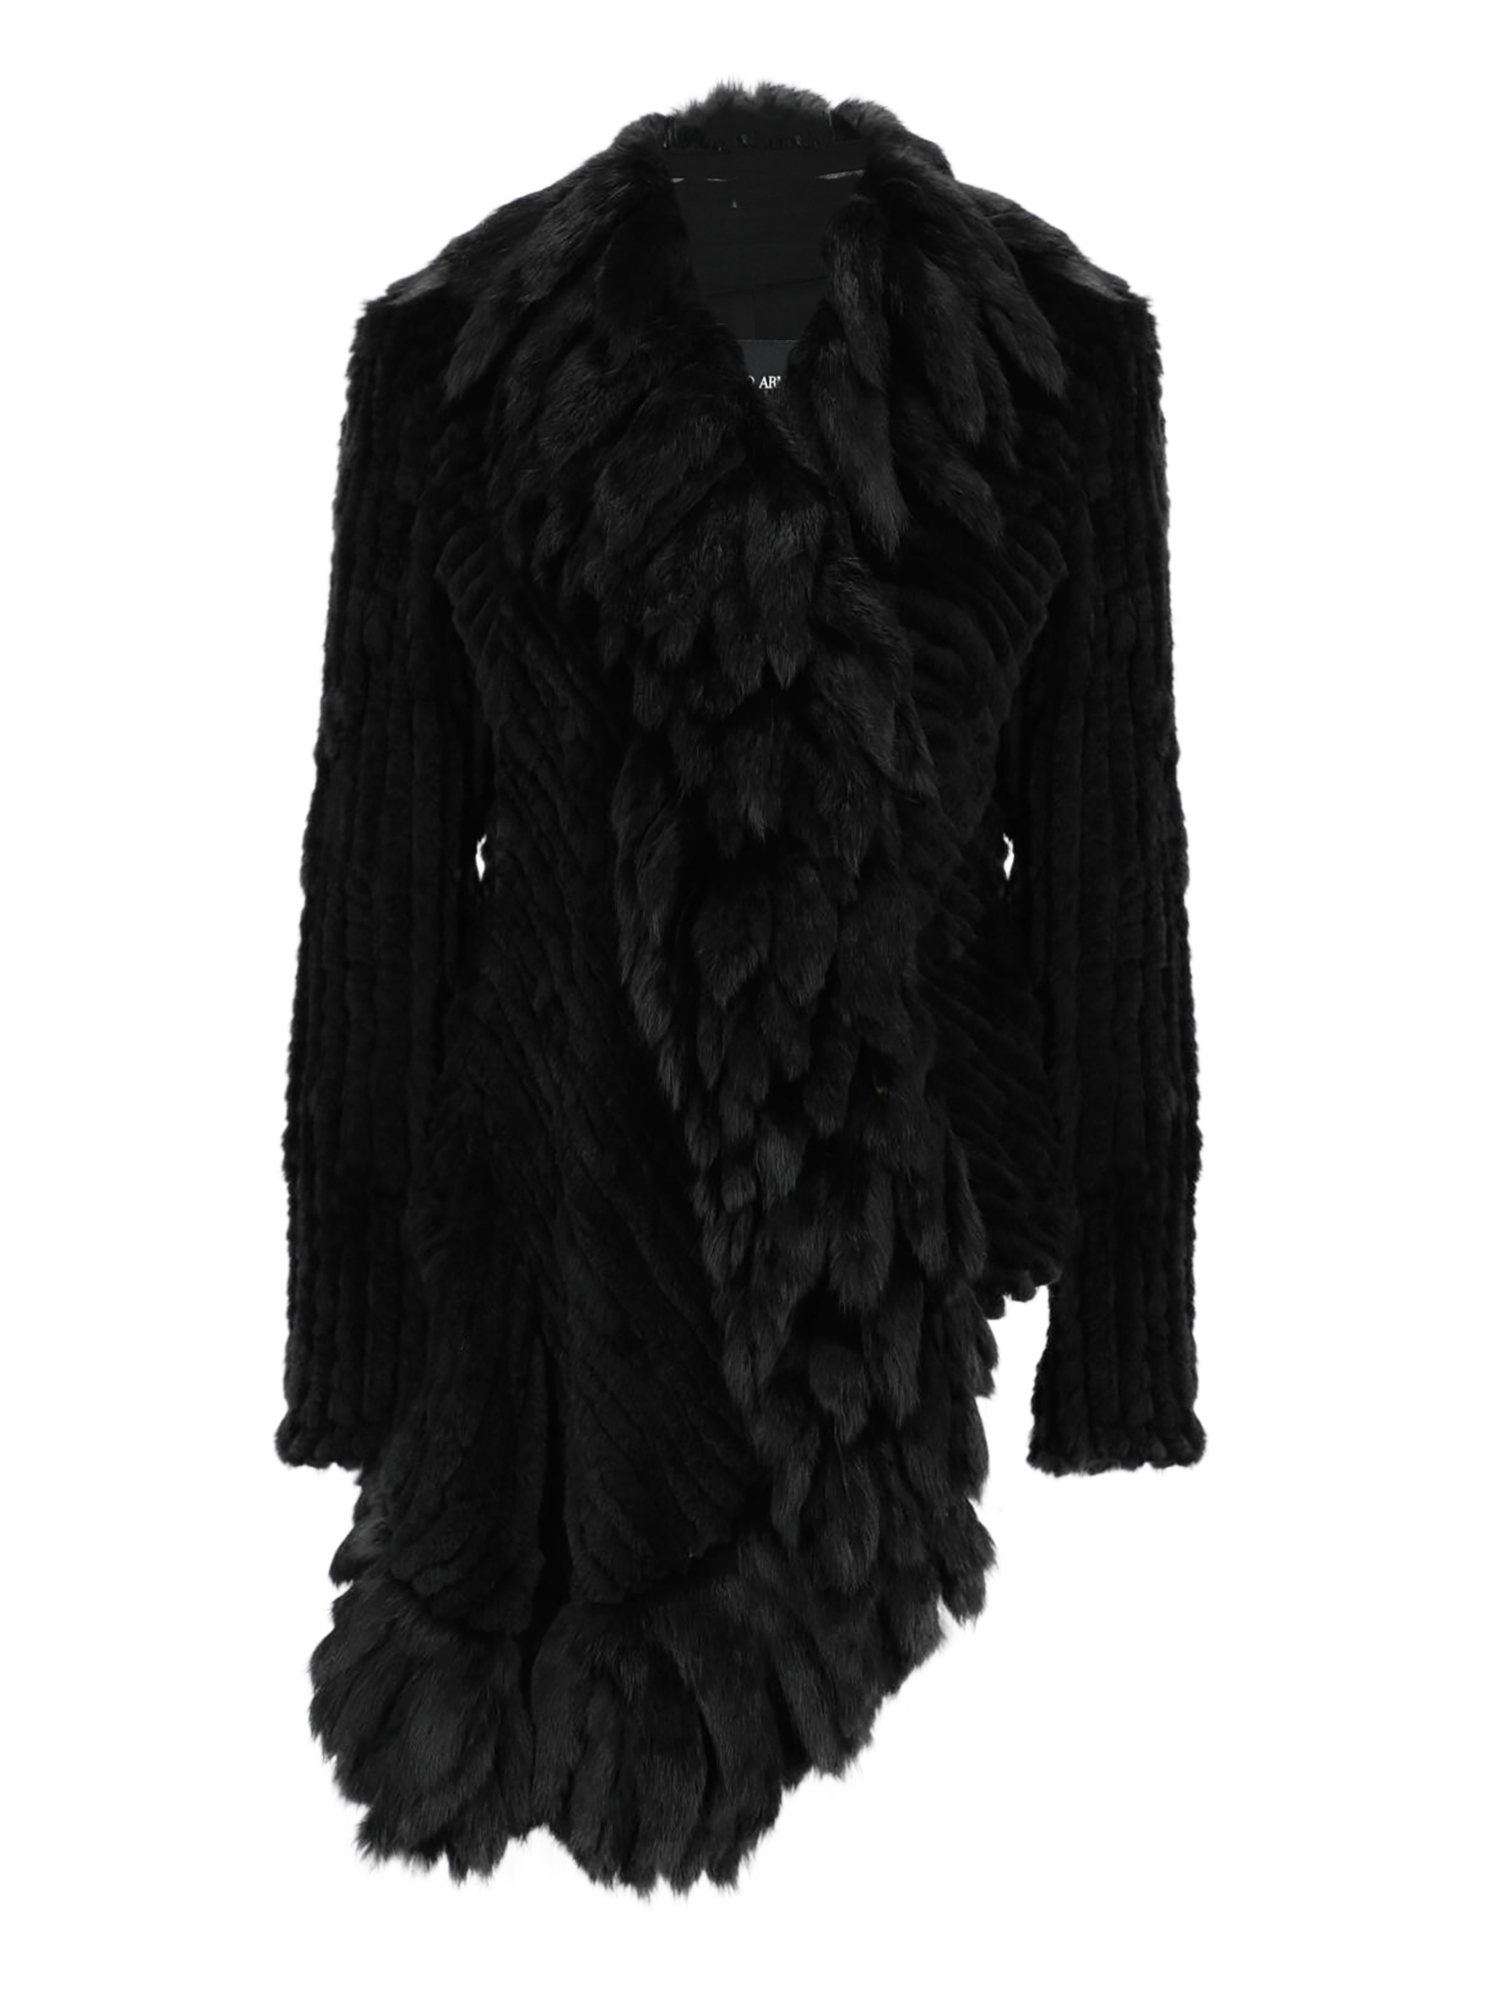 Vestes Pour Femme - Giorgio Armani - En Leather Black - Taille:  -